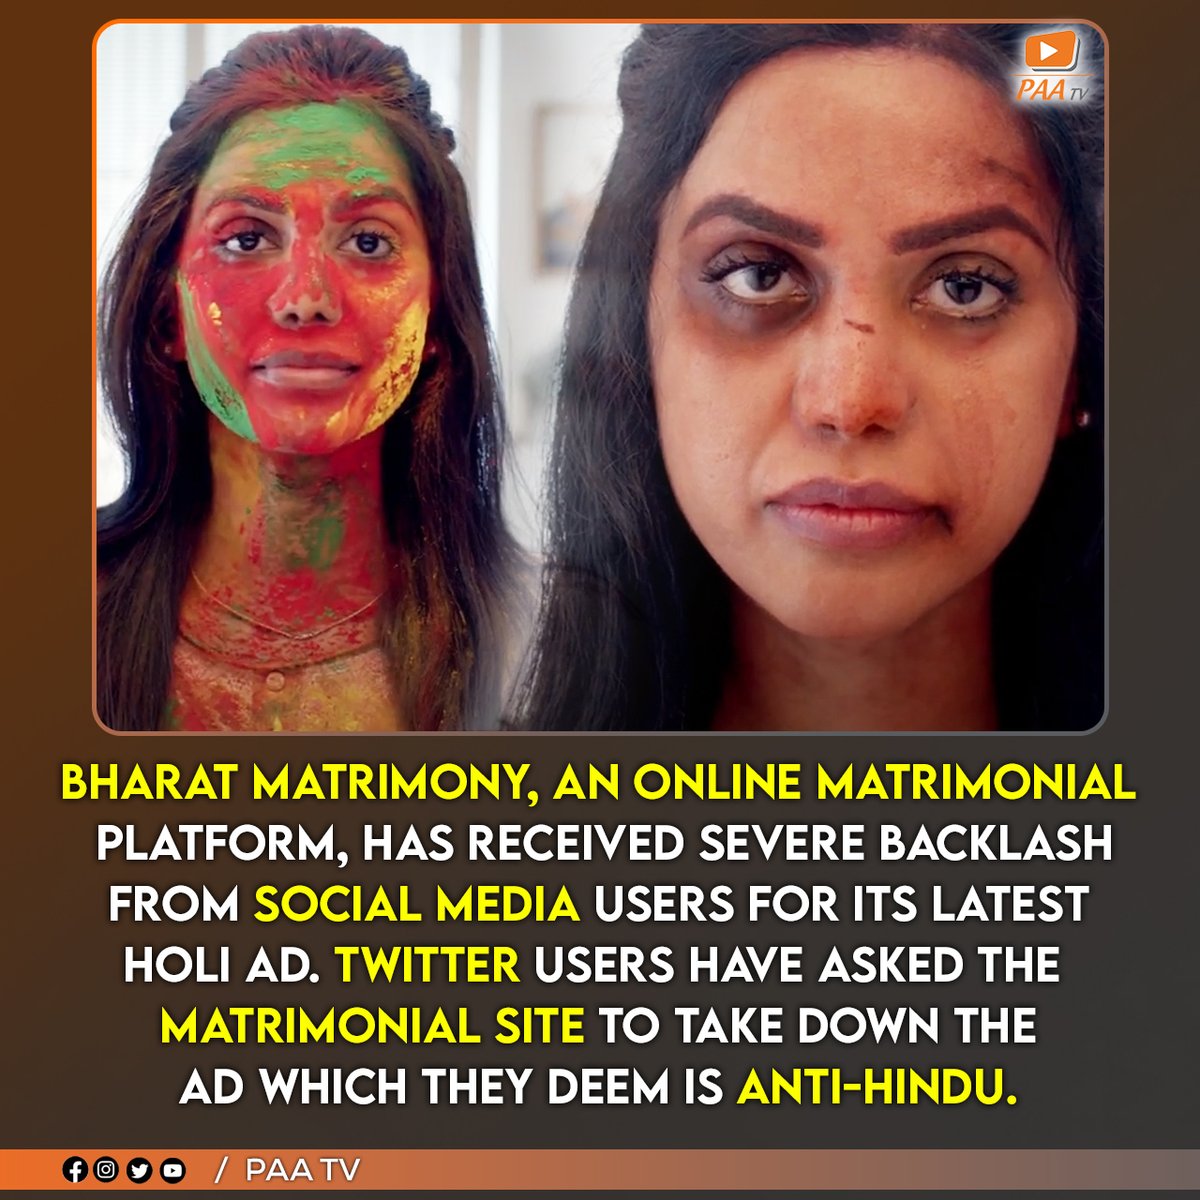 They have also demanded the company to issue an apology.

#PaaTV #apology #bharatmatrimony #socialmedia #twitter #matrimonialsite #antihindu